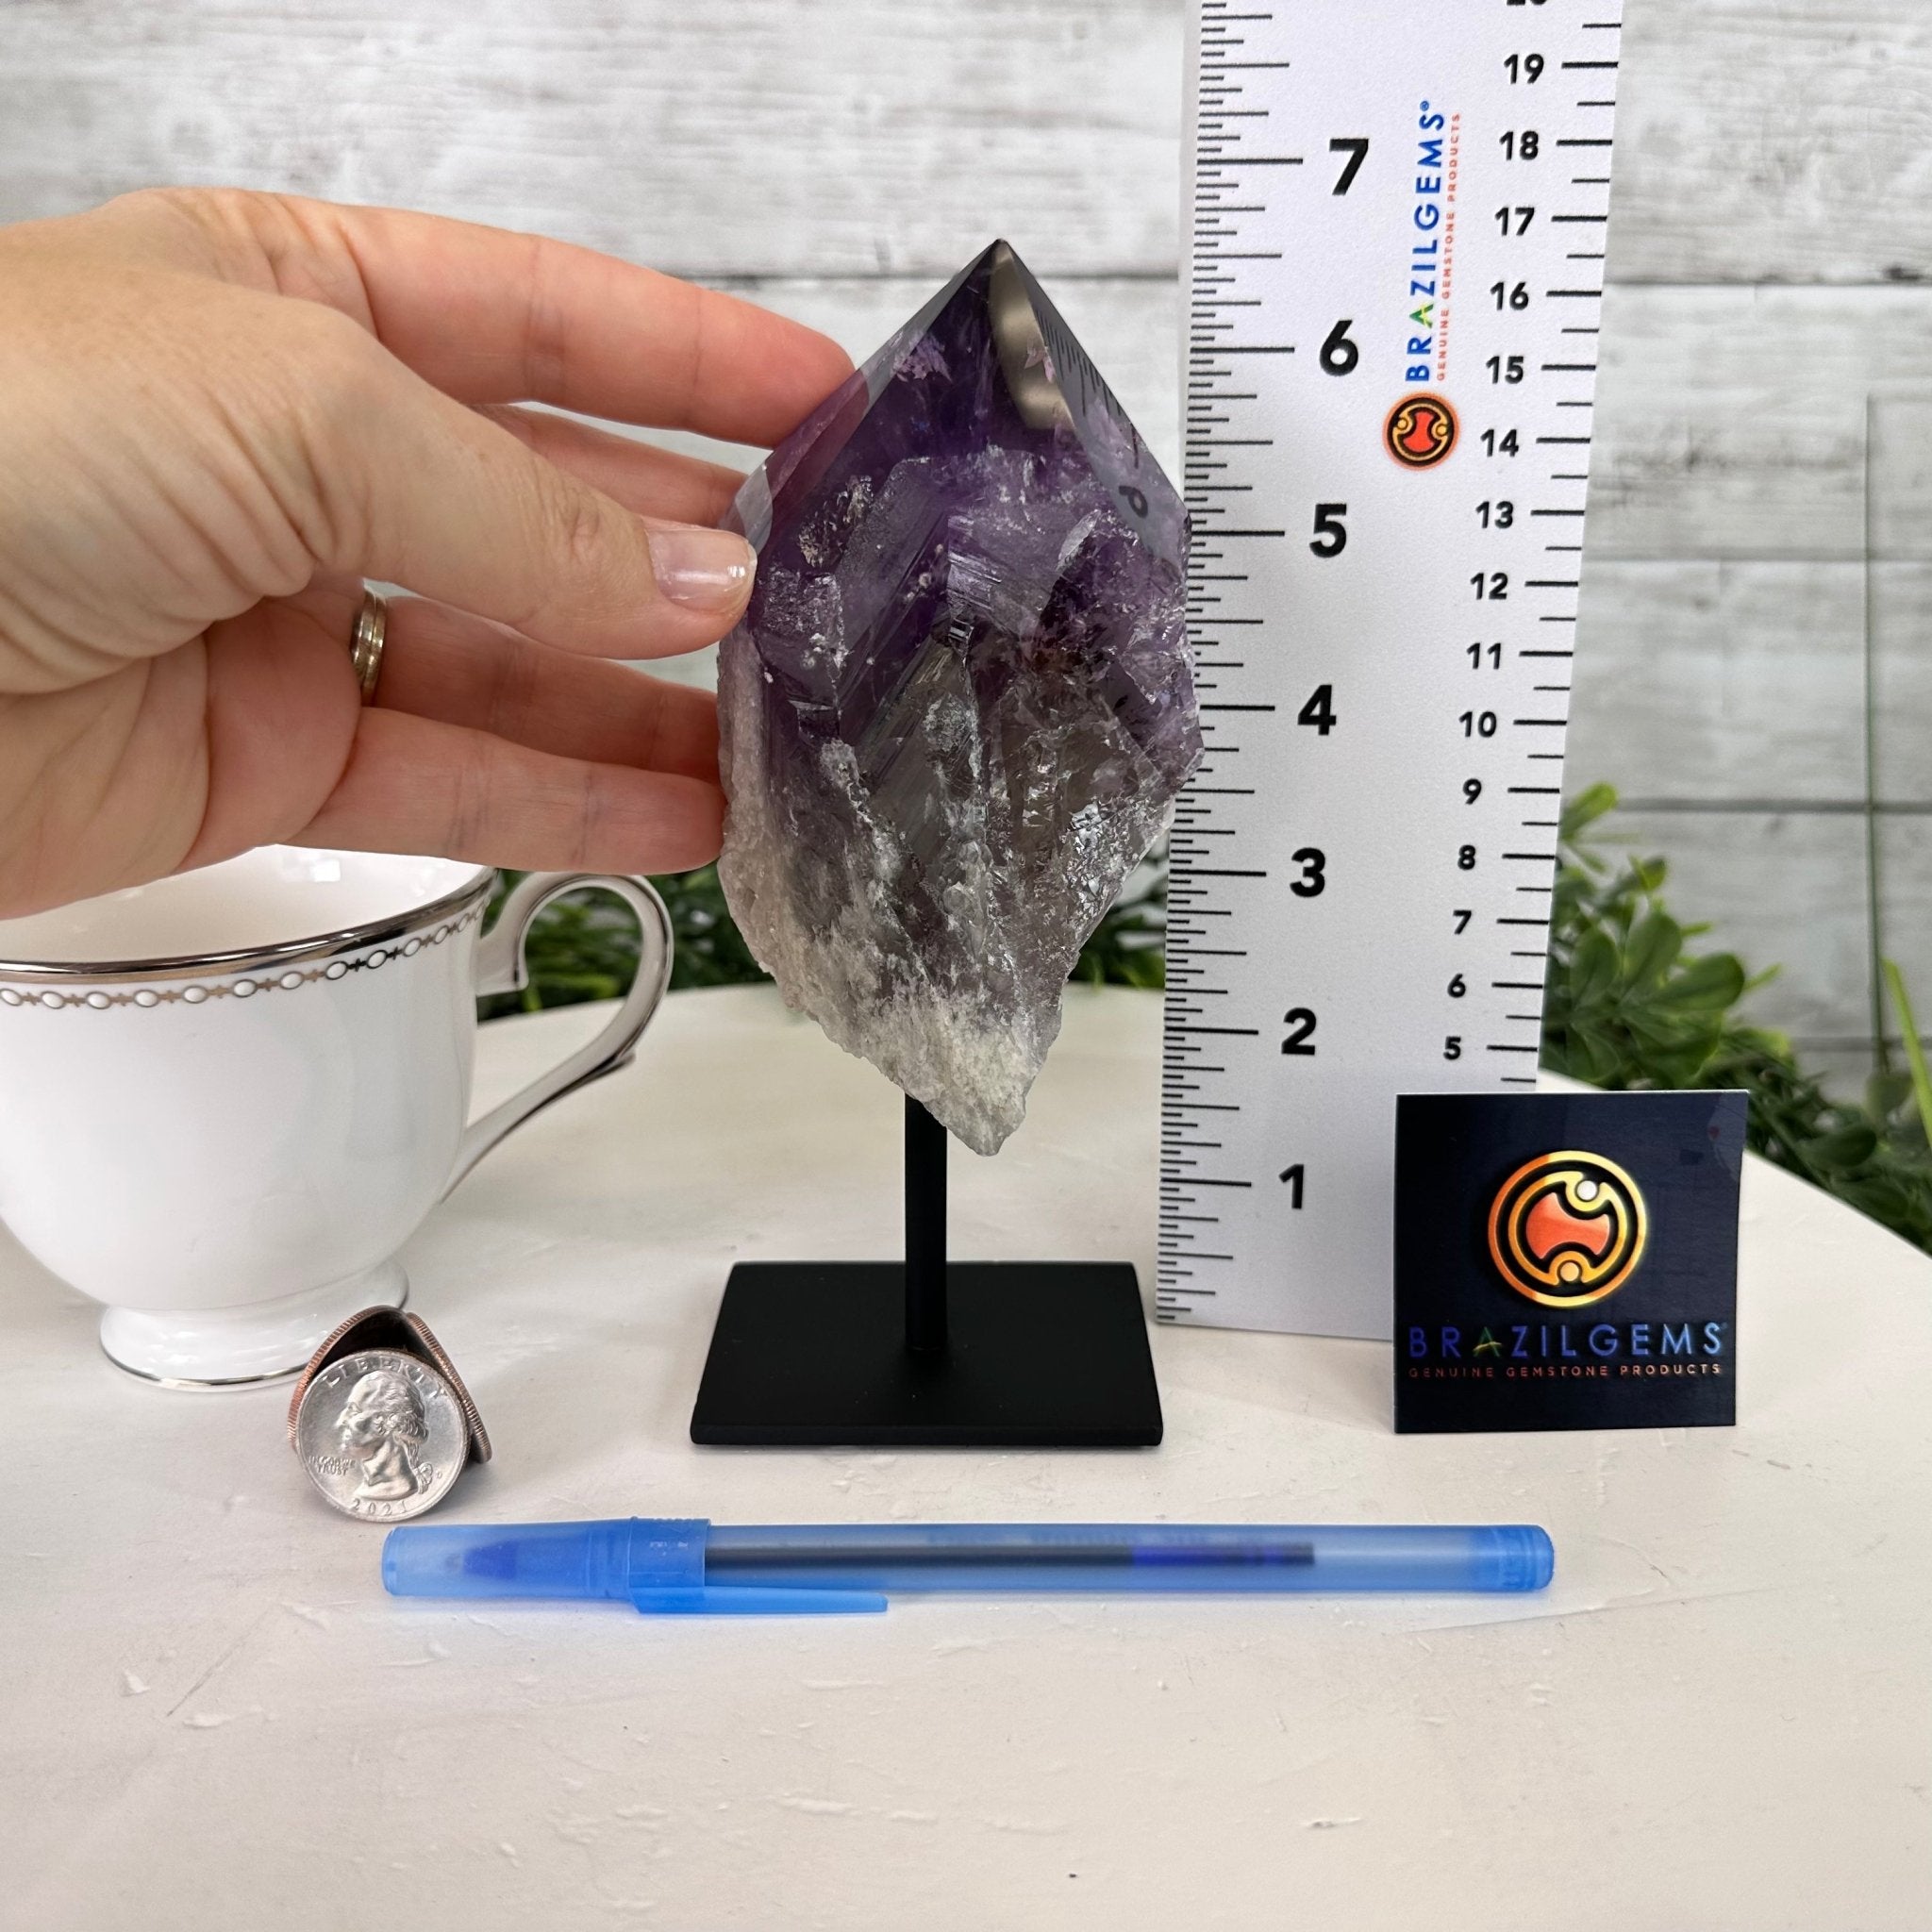 Amethyst Crystal Point on a Metal Stand, 6.5" Tall Model #3122AM-002 by Brazil Gems - Brazil GemsBrazil GemsAmethyst Crystal Point on a Metal Stand, 6.5" Tall Model #3122AM-002 by Brazil GemsCrystal Points3122AM-002